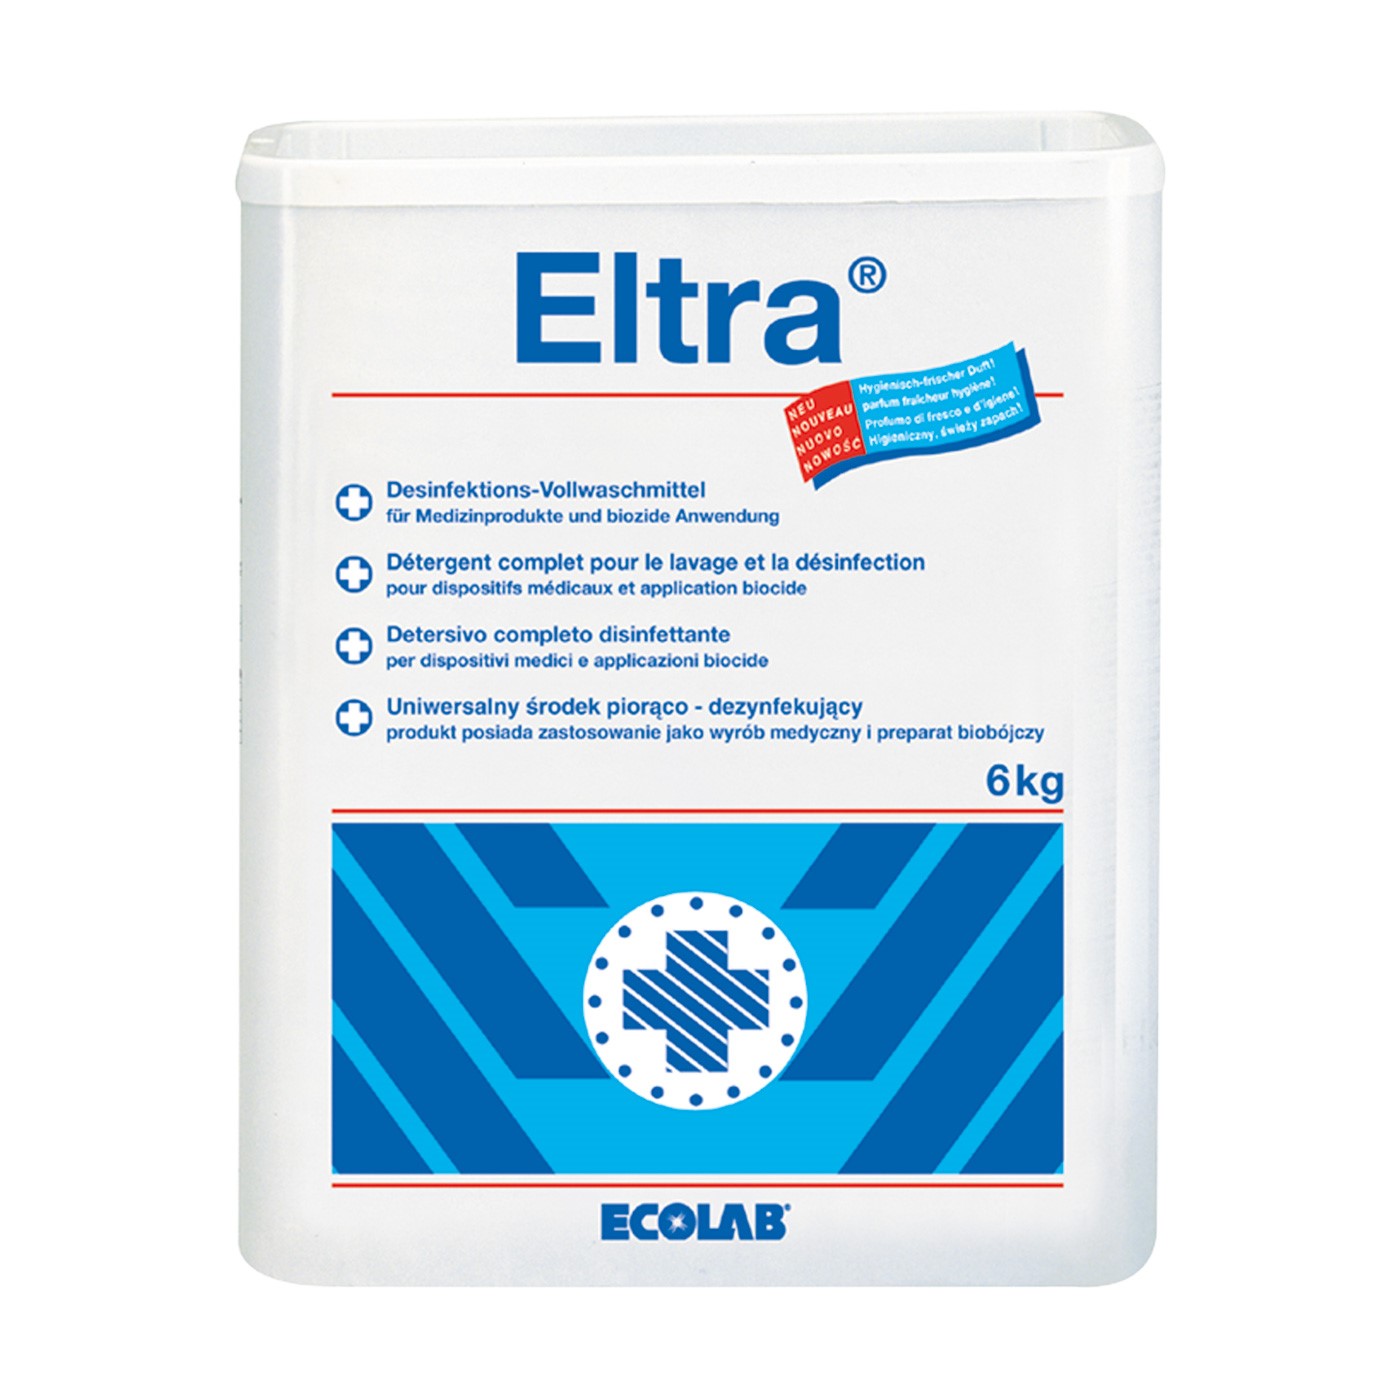 Eltra Desinfektions-Vollwaschmittel, 6 kg